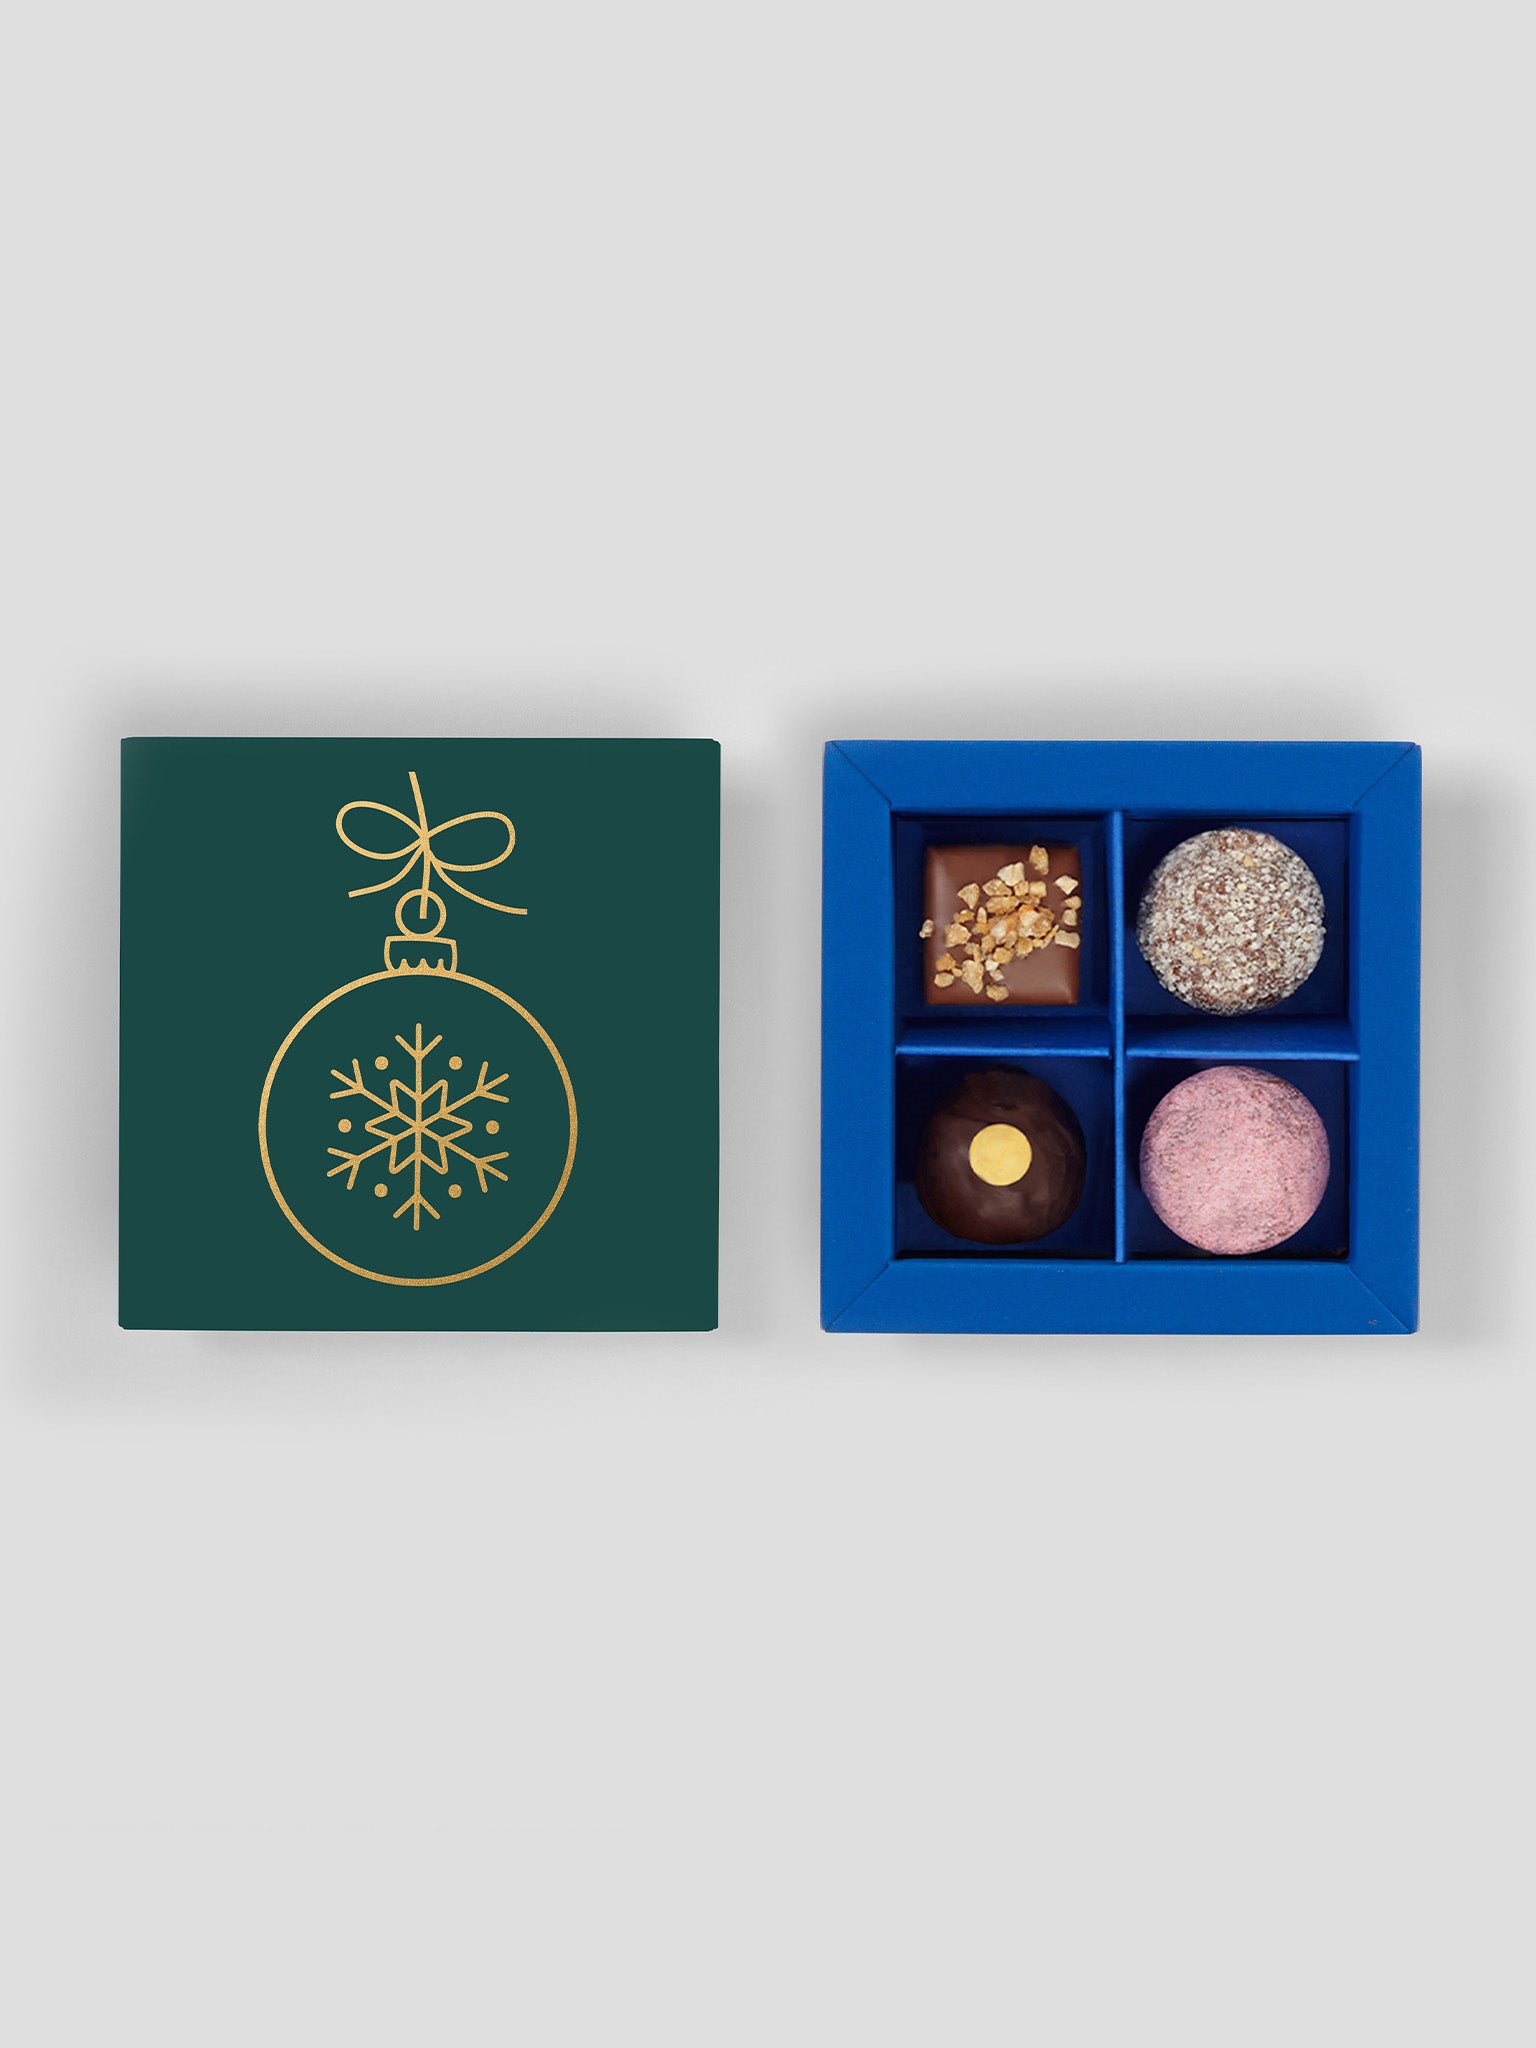 Small box with 4 chocolates - Christmas ornament